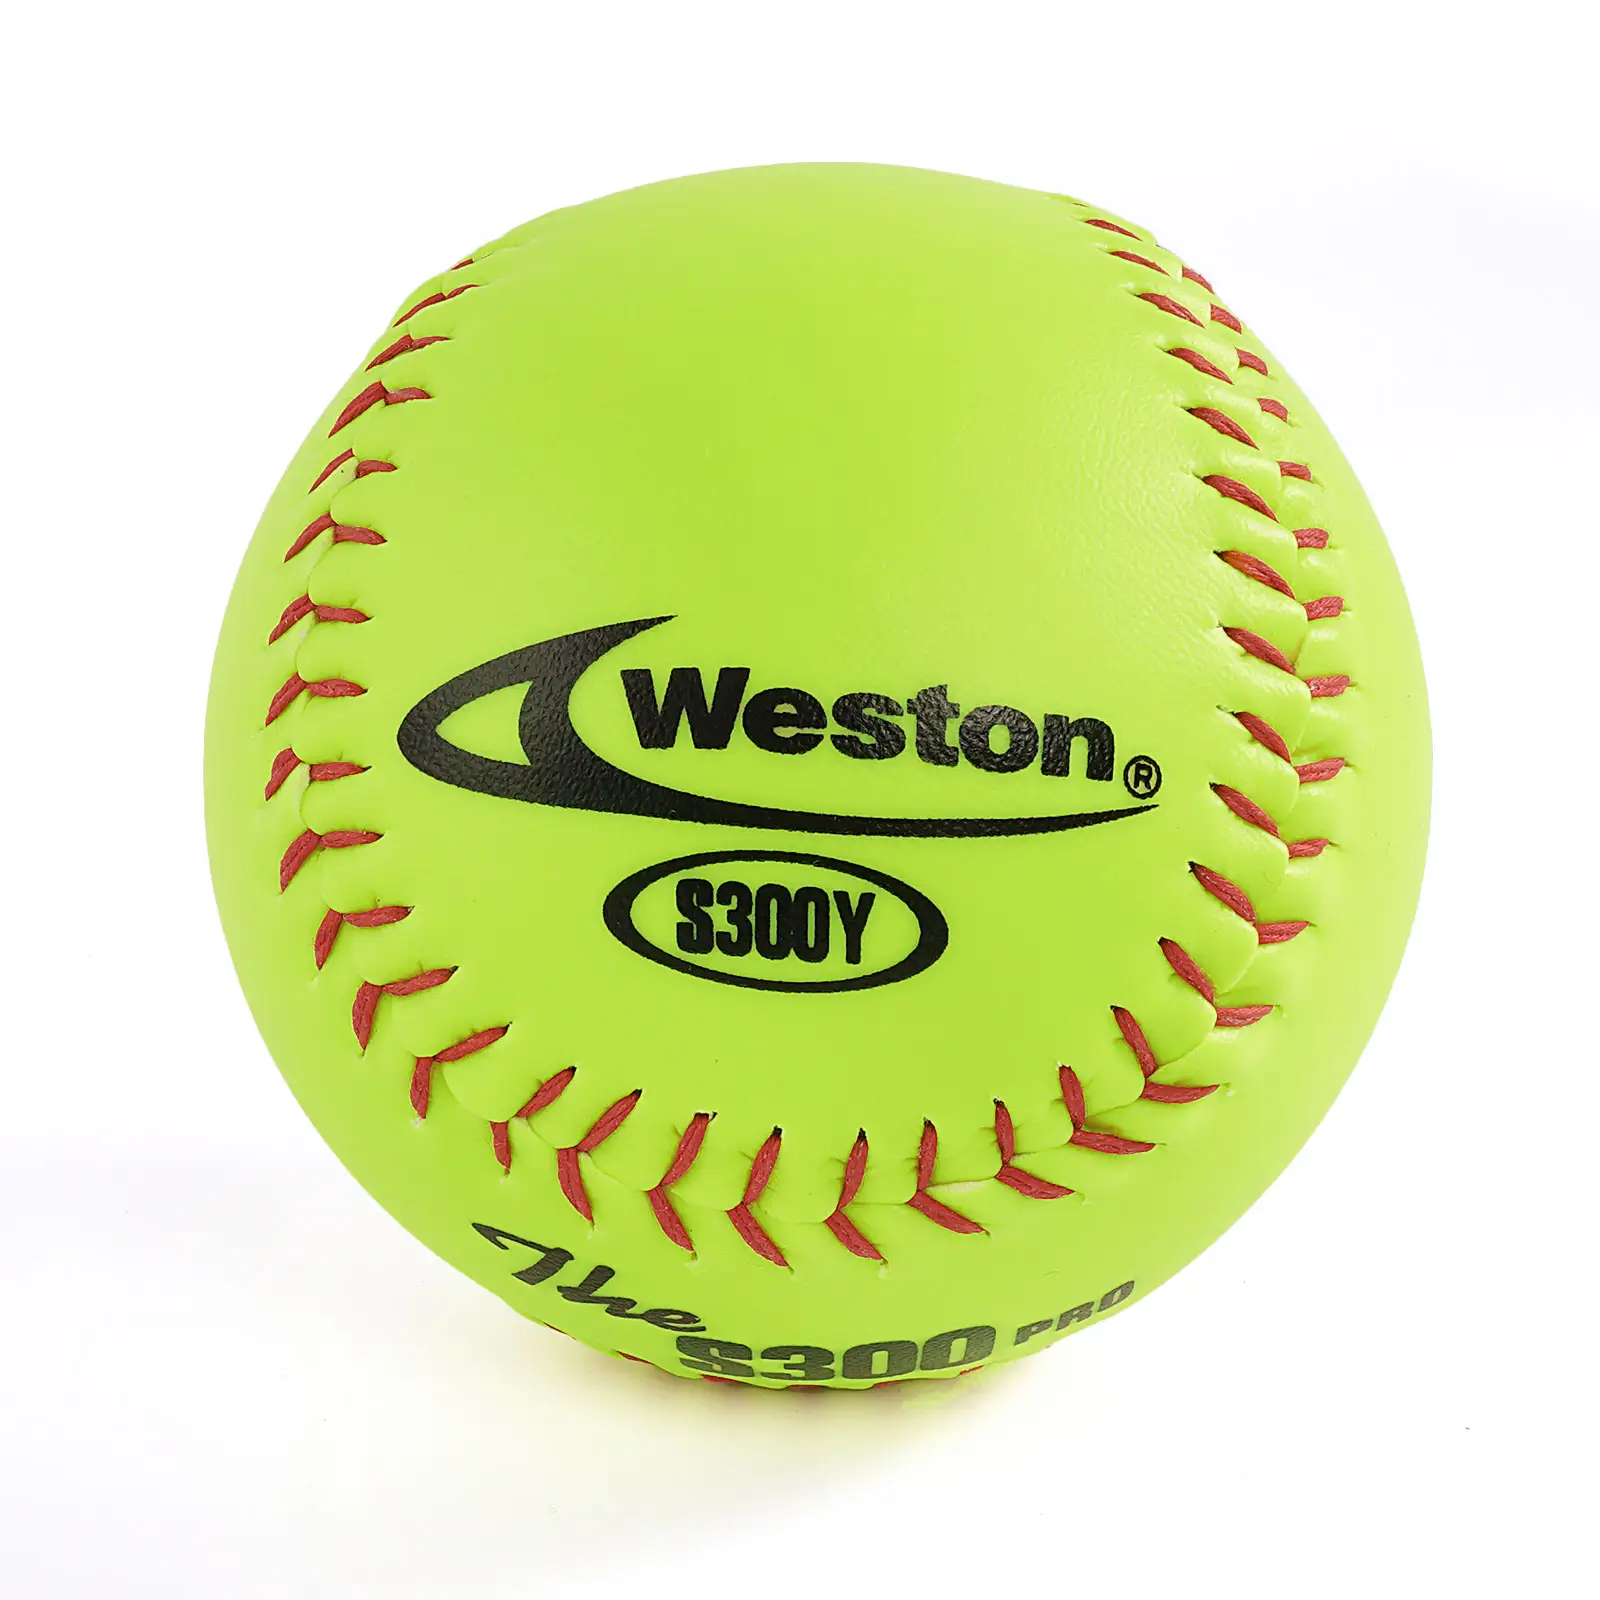 Practicing Yellow 12 inch weston s300 pitching ball machine sports practice baseball pelotas custom tamanaco 120i de so